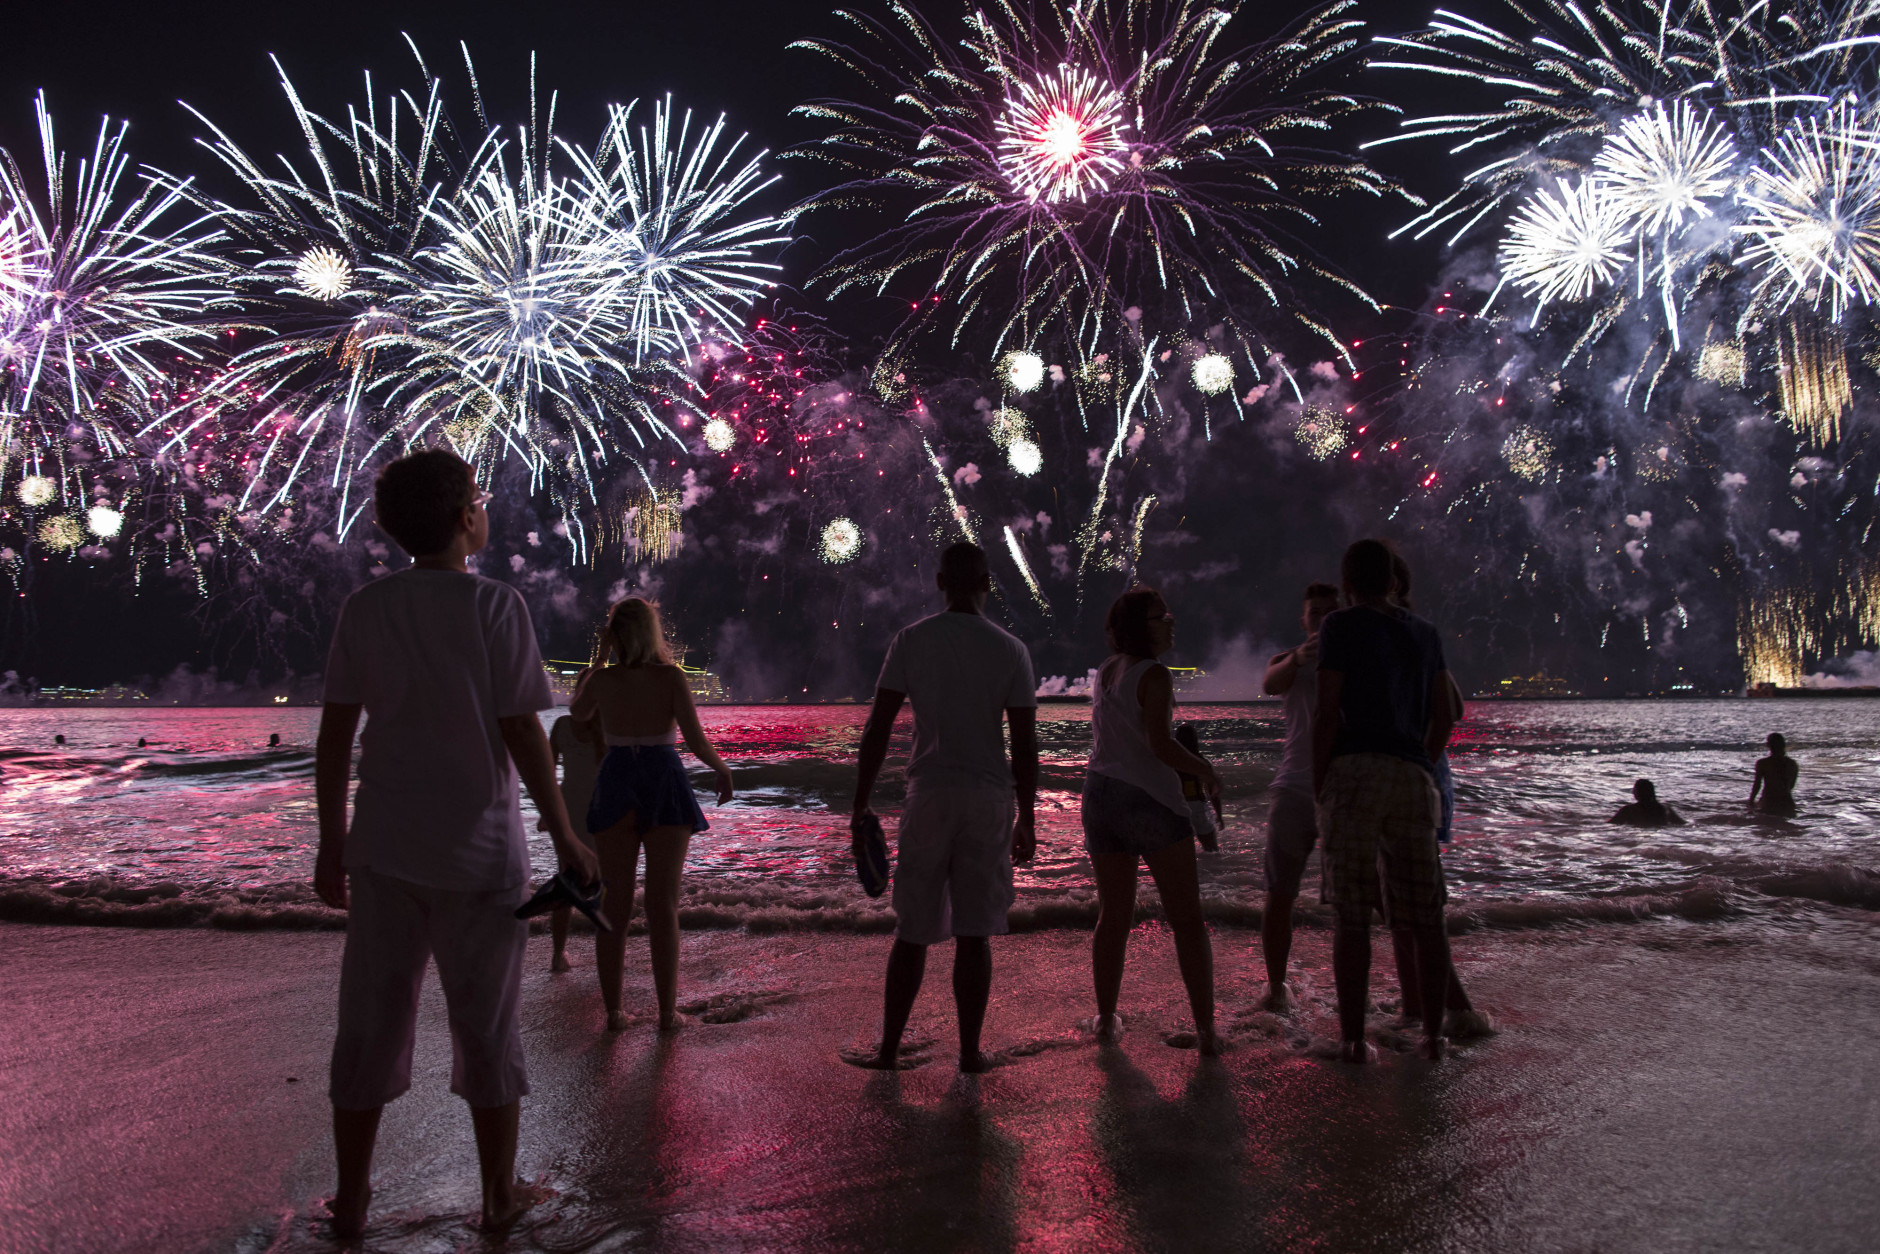 People watch fireworks exploding over Copacabana beach during New Year celebrations in Rio de Janeiro, Brazil, Thursday, Jan. 1, 2015. (AP Photo/Felipe Dana)